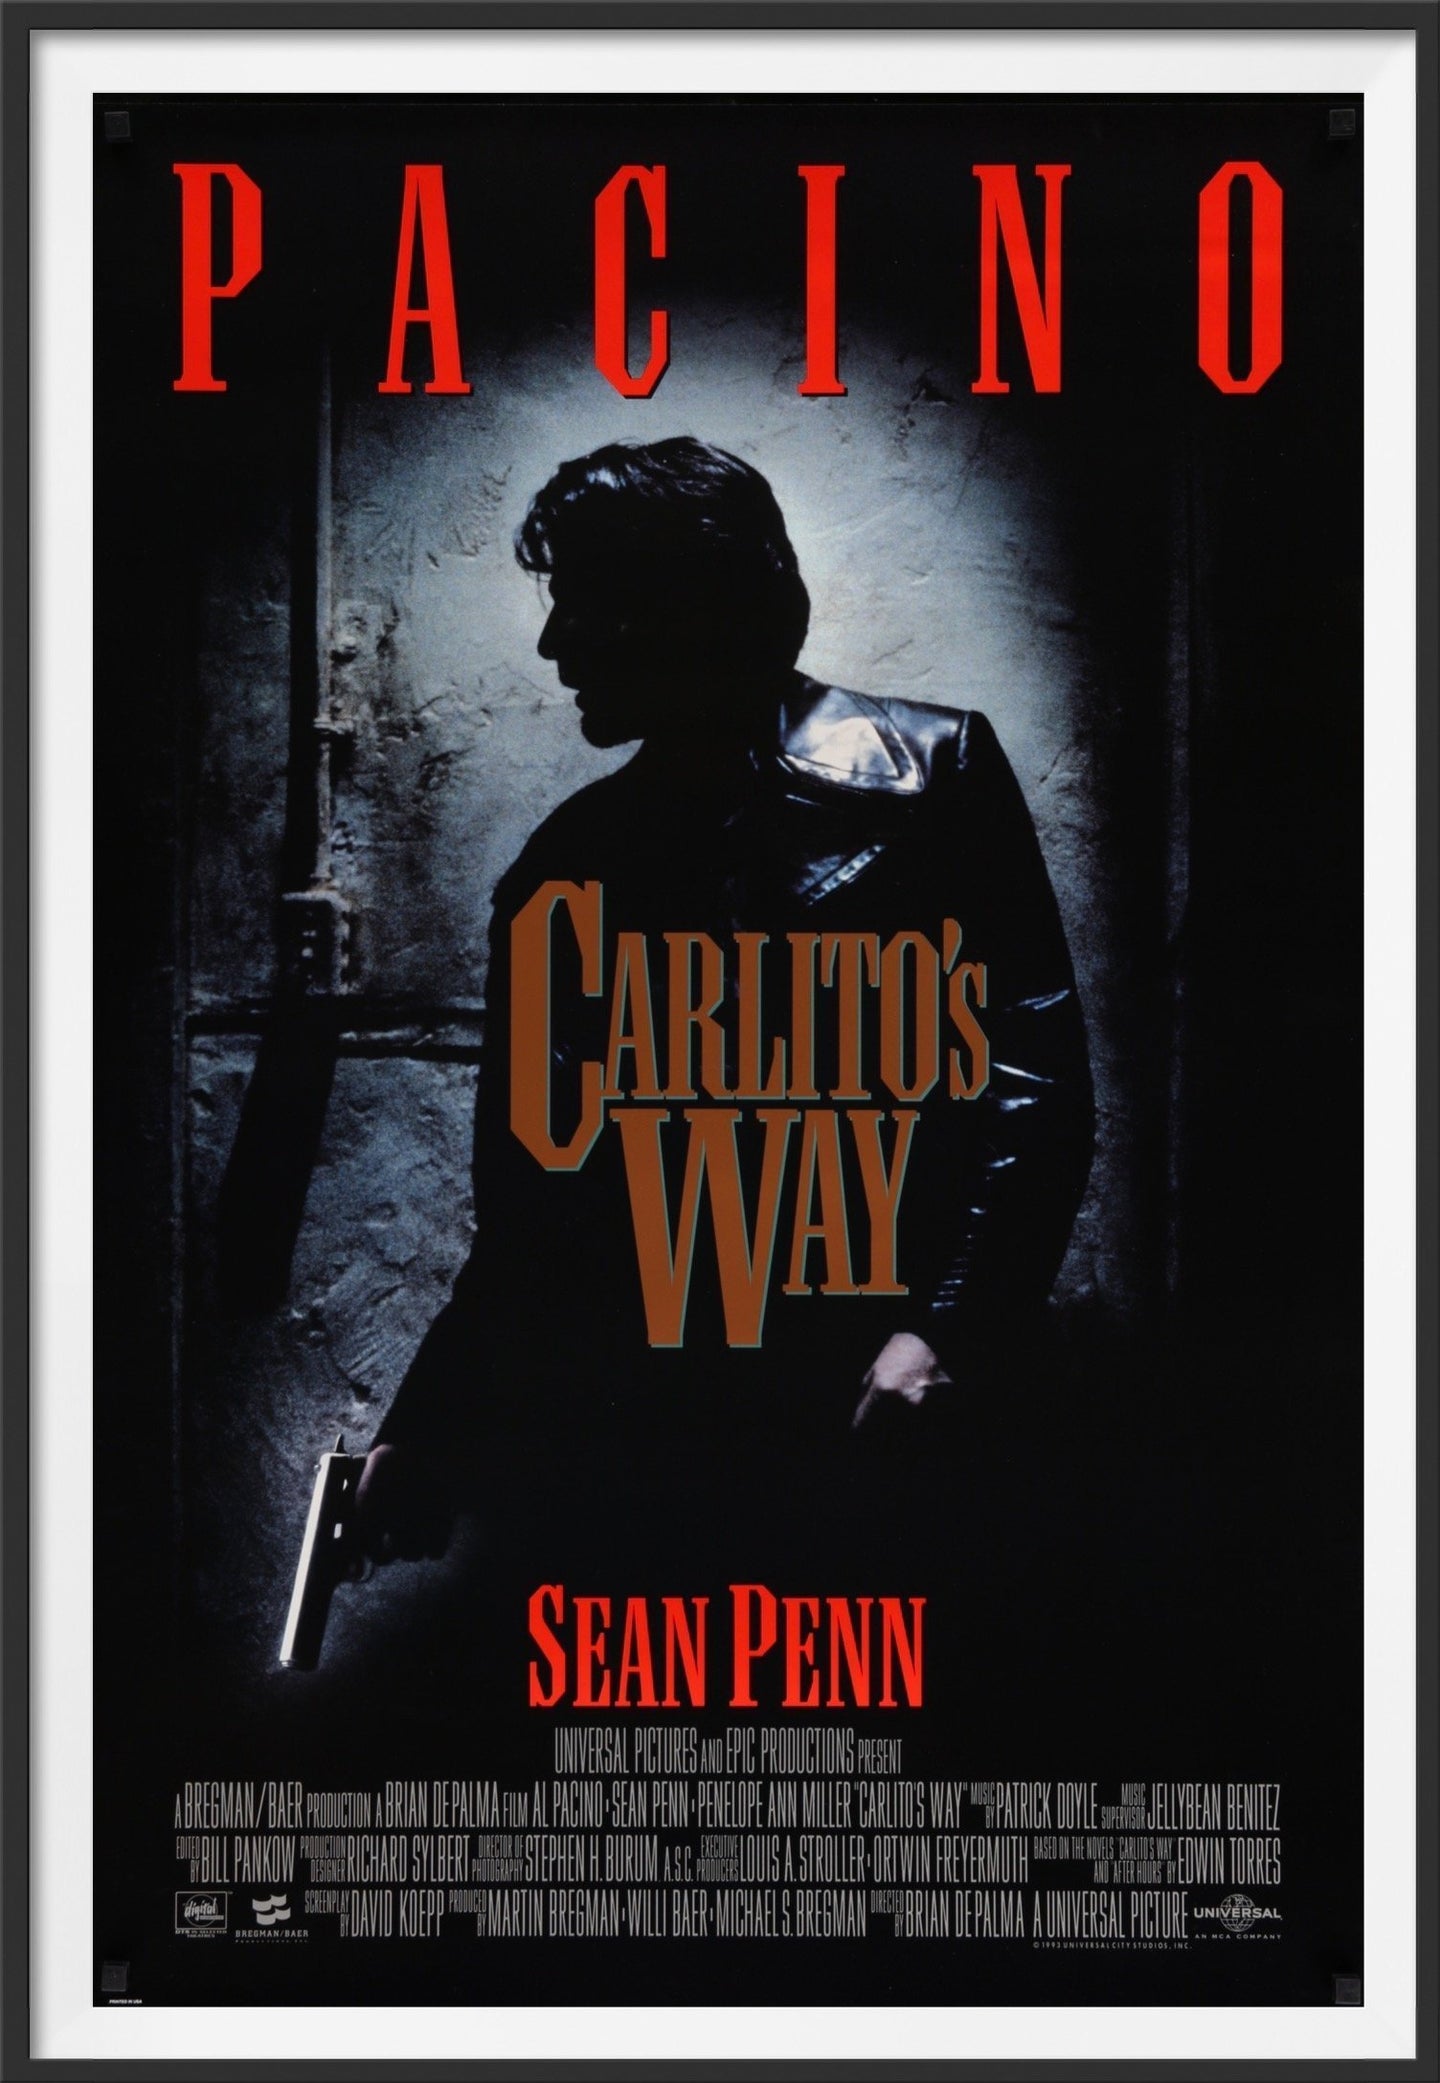 An original movie poster for the film Carlito's Way